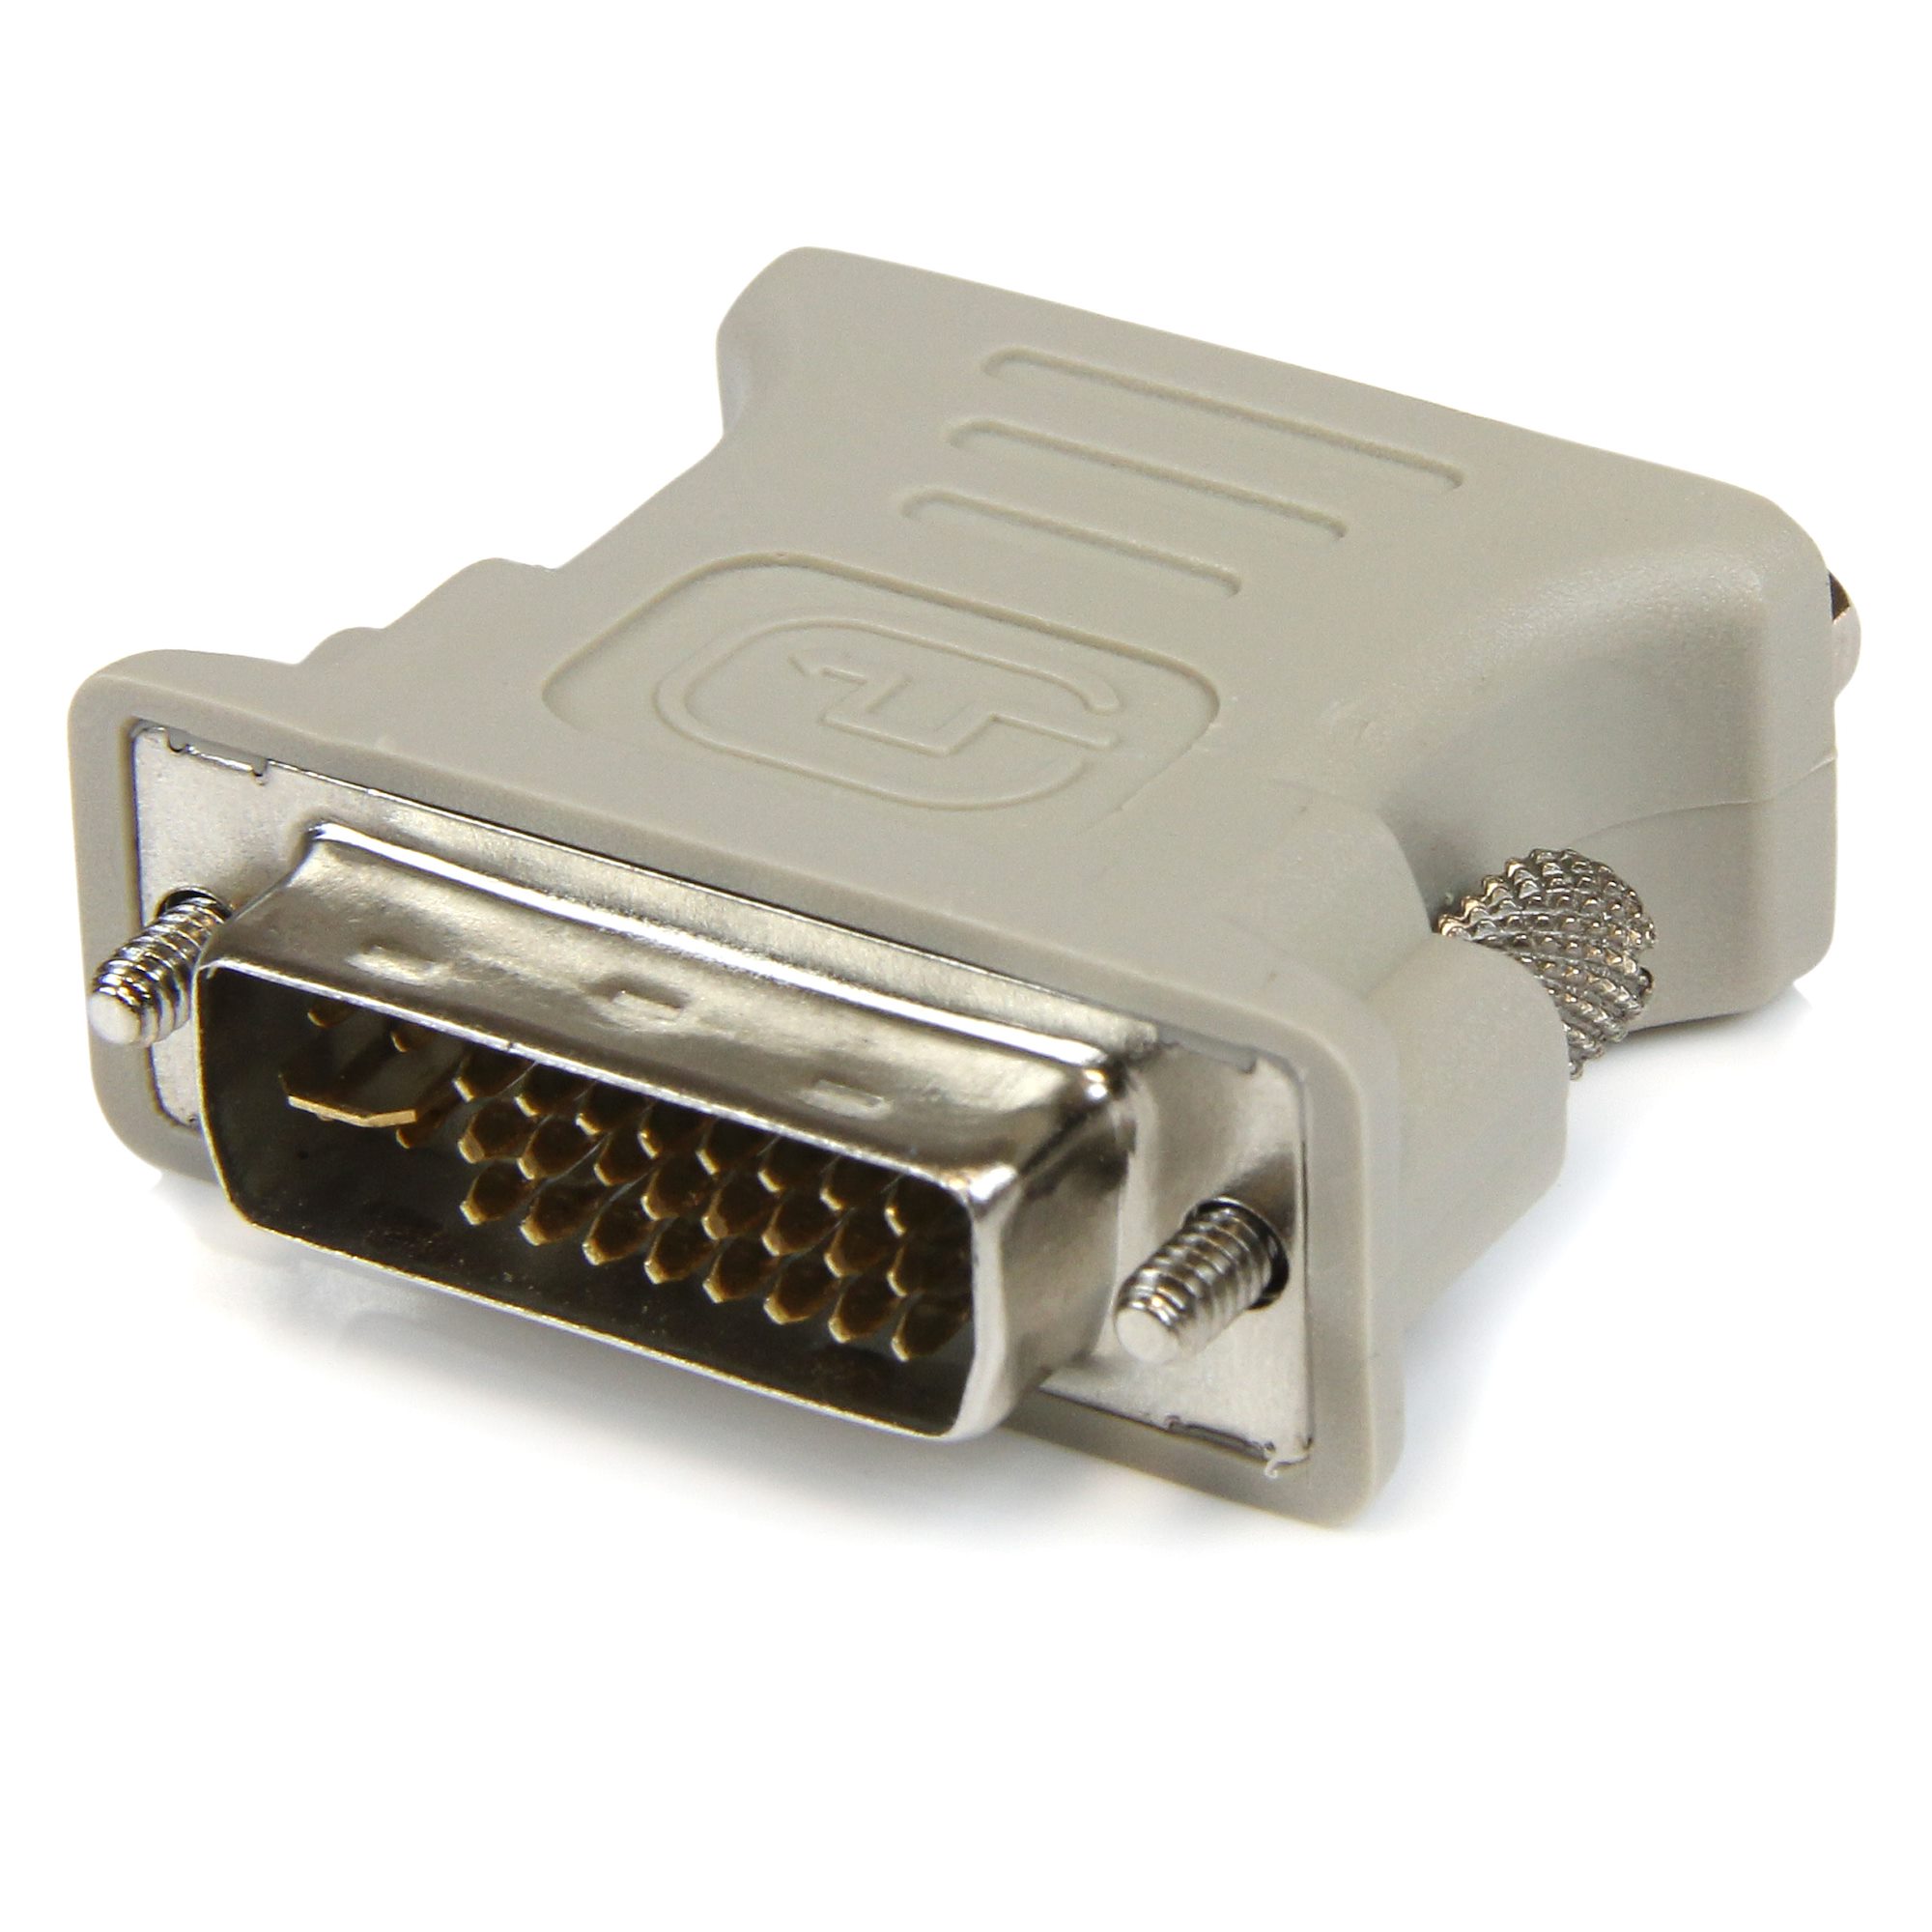 M/F DVI-I to VGA Converter Adapter Black StarTech.com DVI to VGA Cable Adapter DVIVGAMFBK